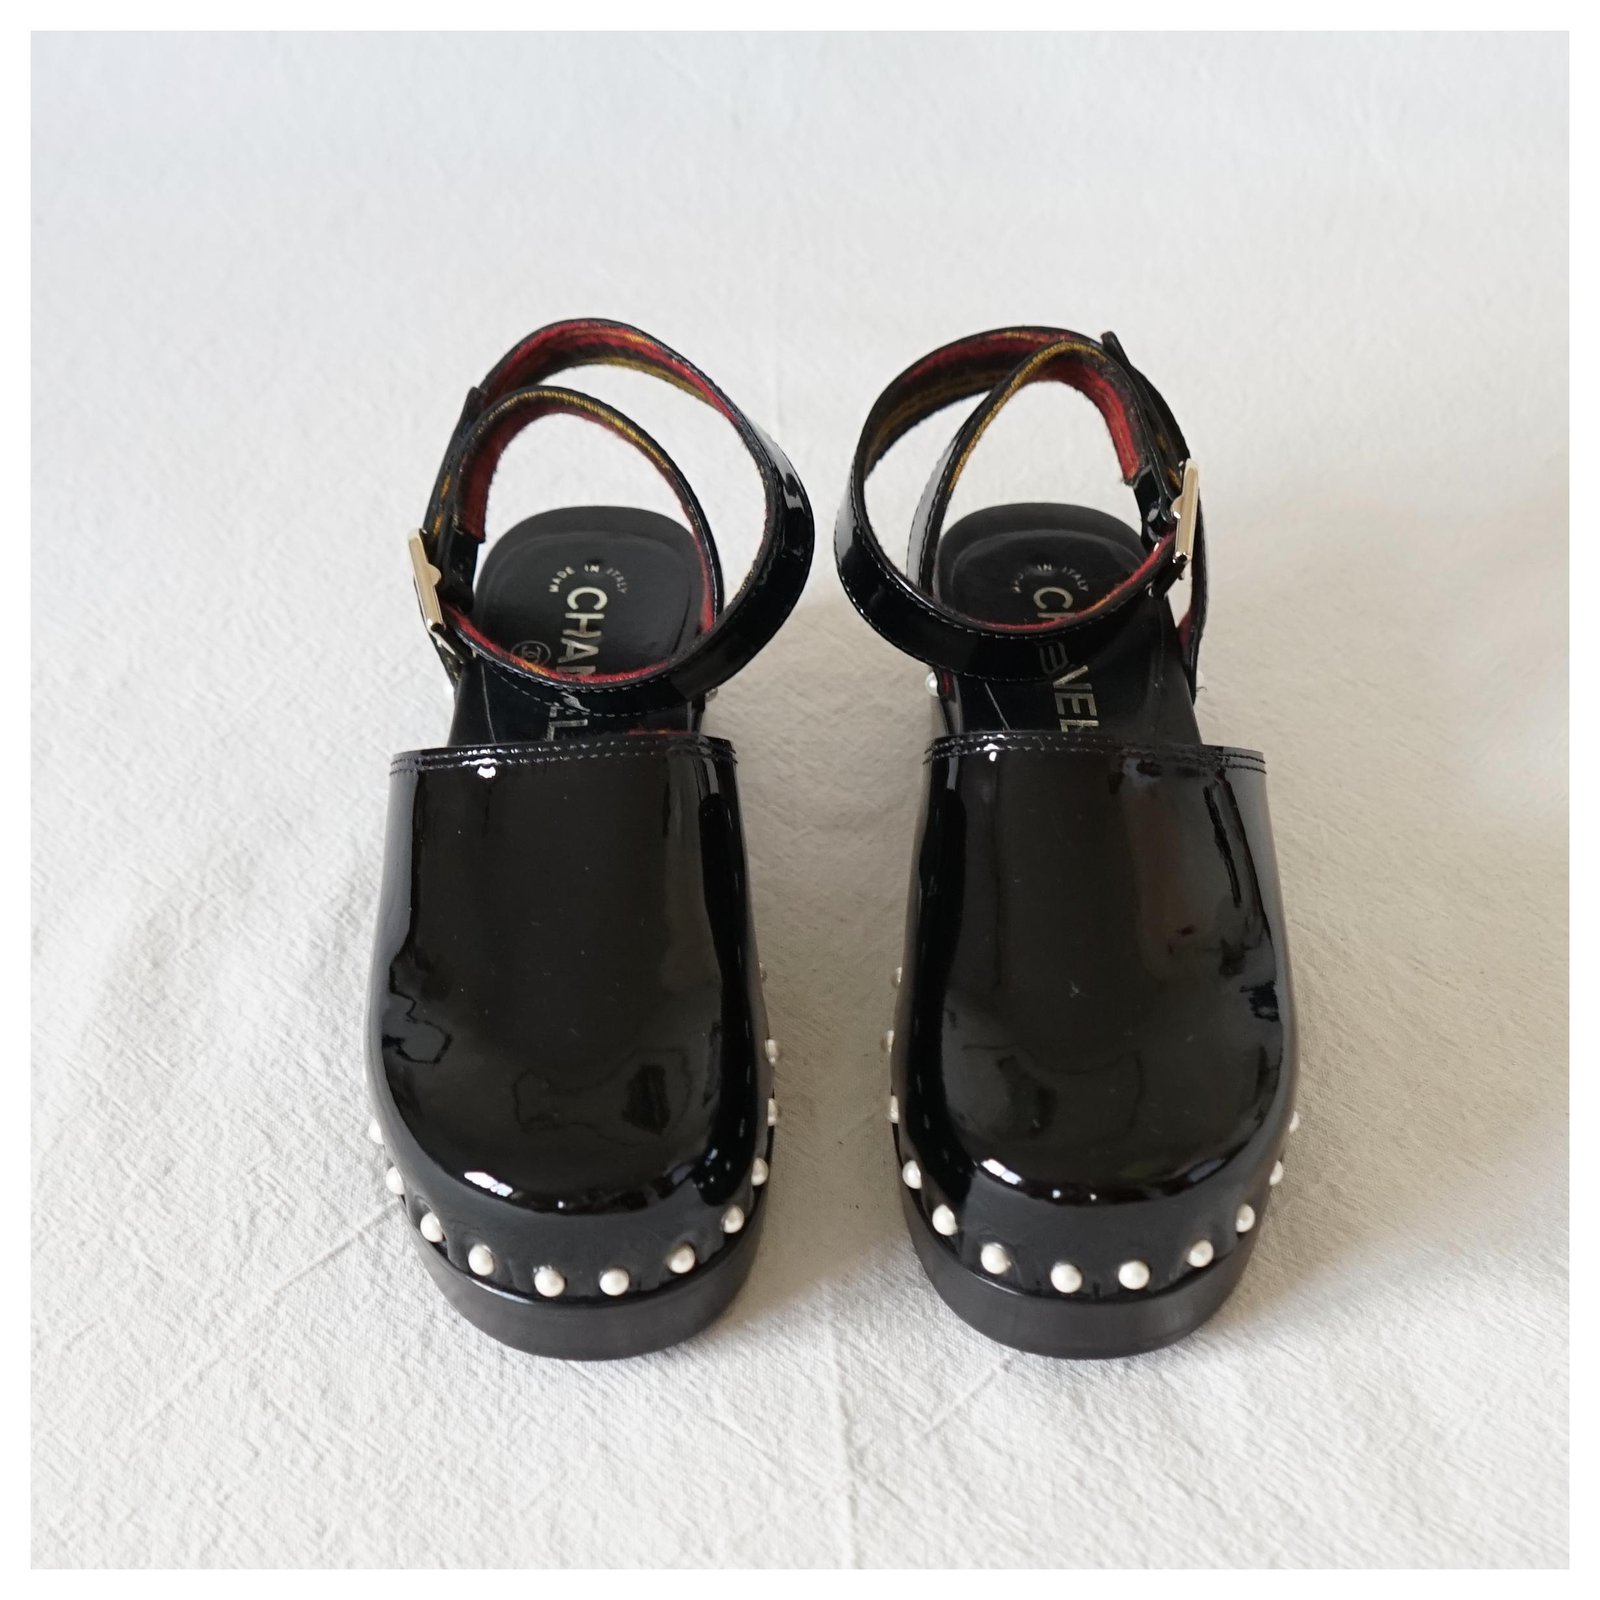 Mary janes - Patent calfskin, black — Fashion